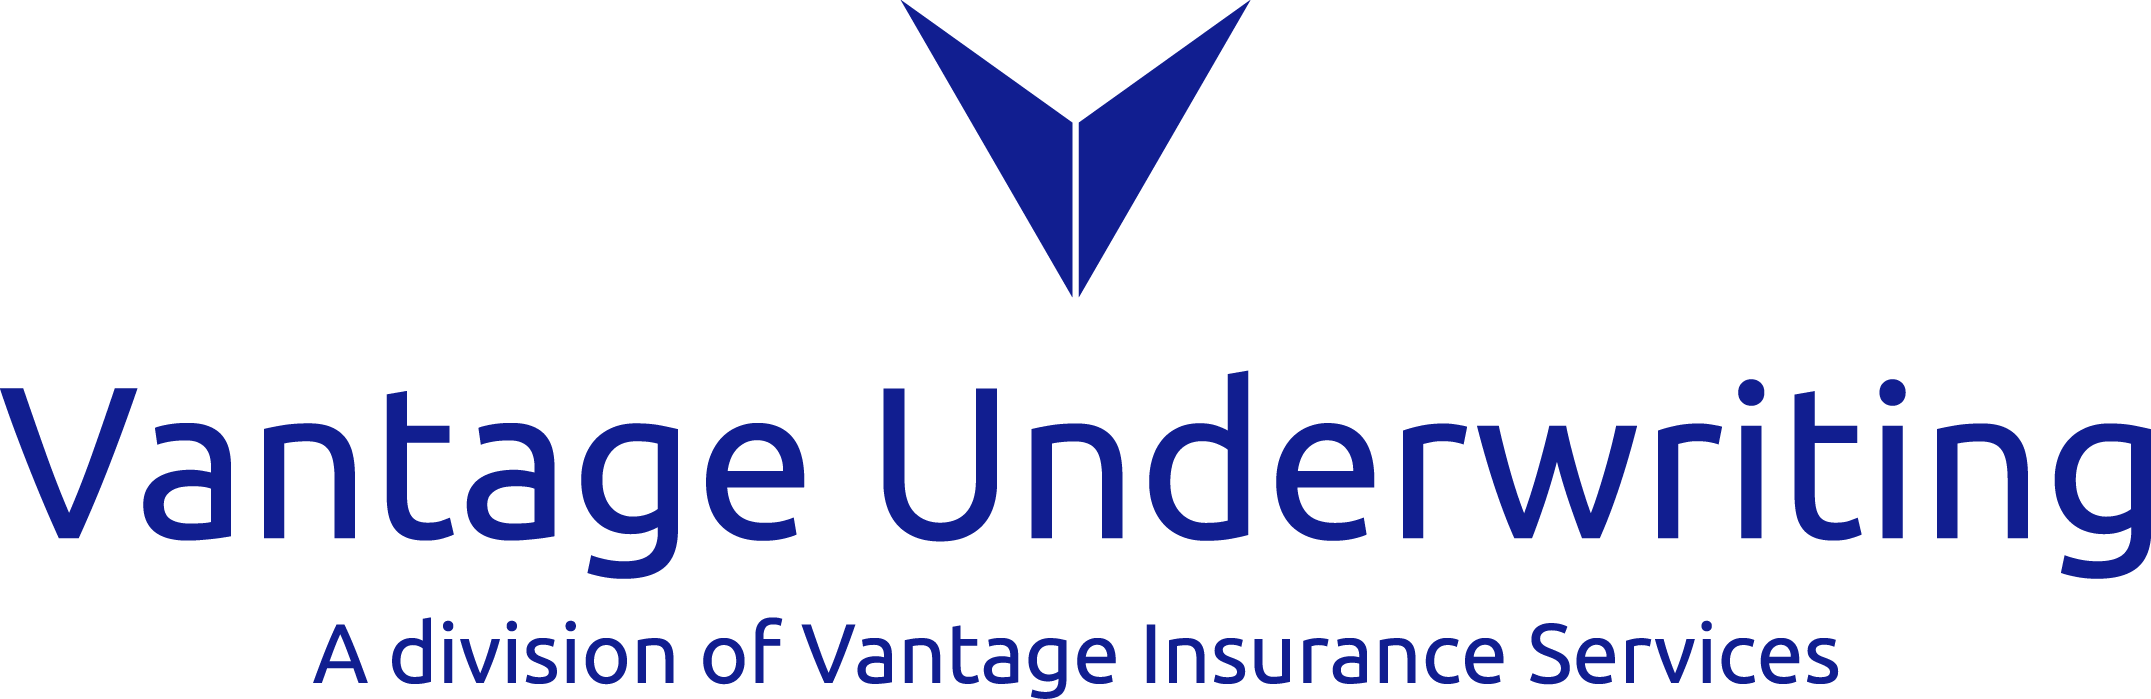 Vantage Logo - Vantage Underwriting Logo STACKED RGB. Vantage Insurance Services